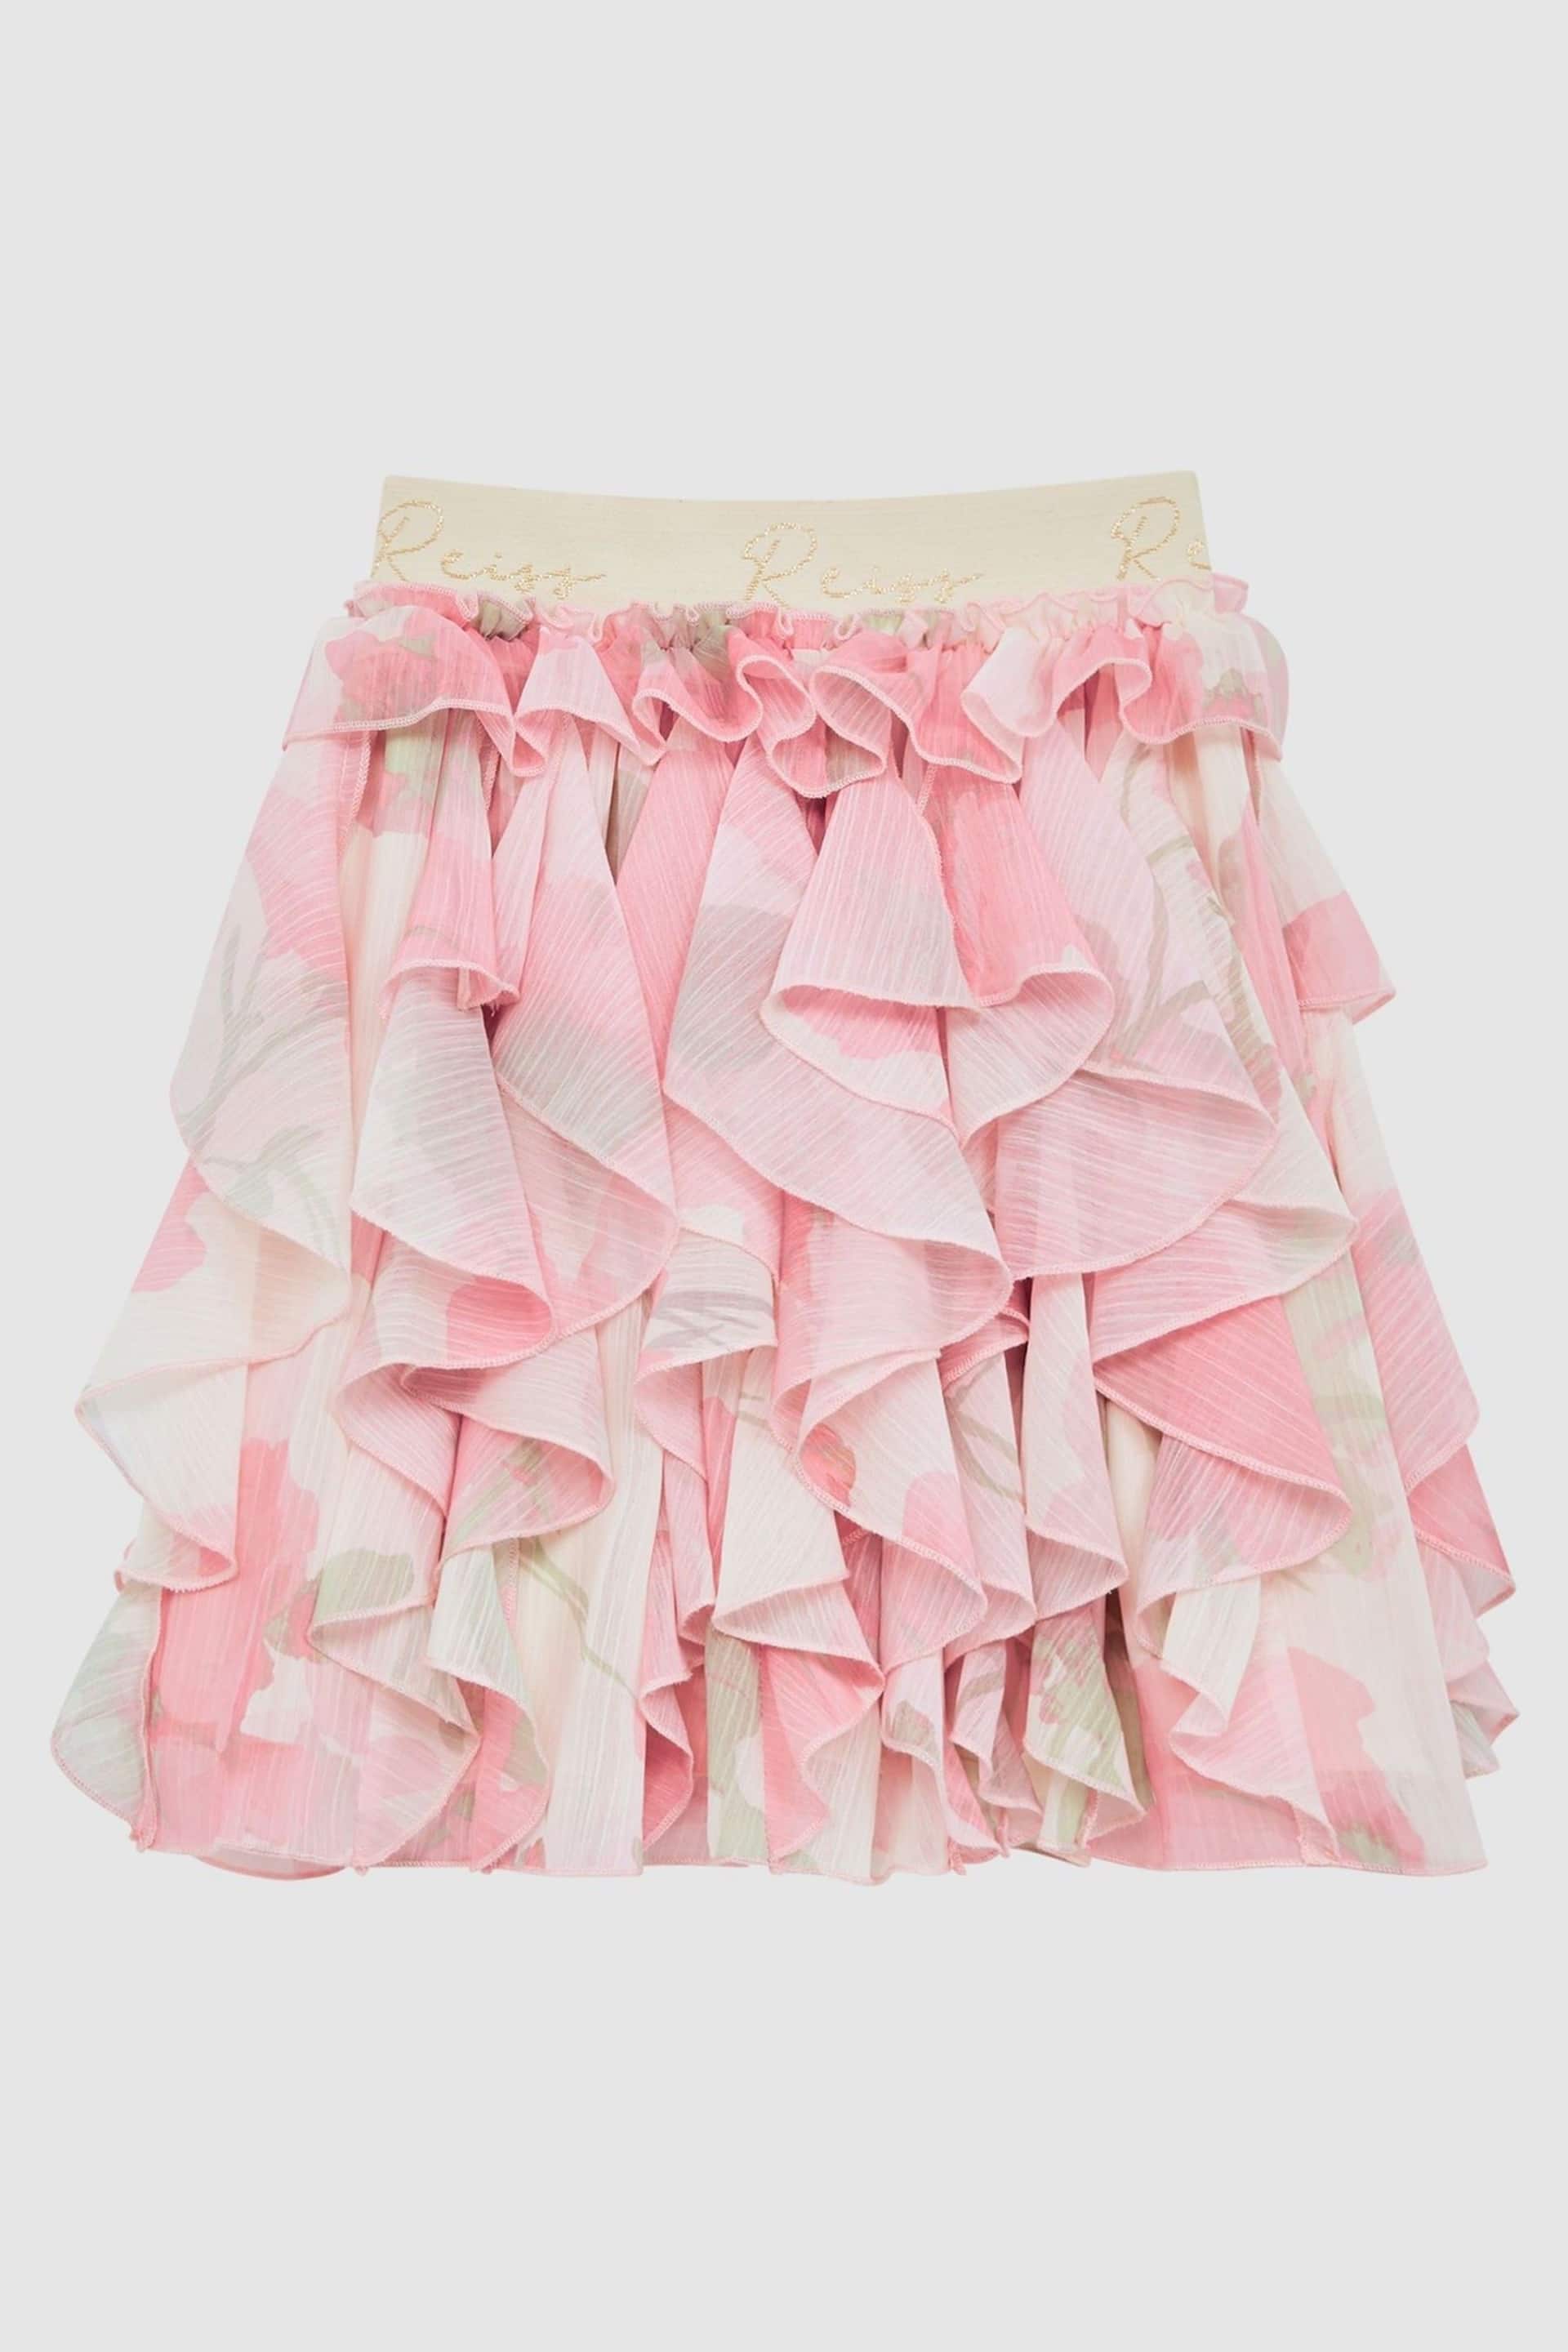 Reiss Pink Print Lola Junior Ruffle Tulle Skirt - Image 2 of 7